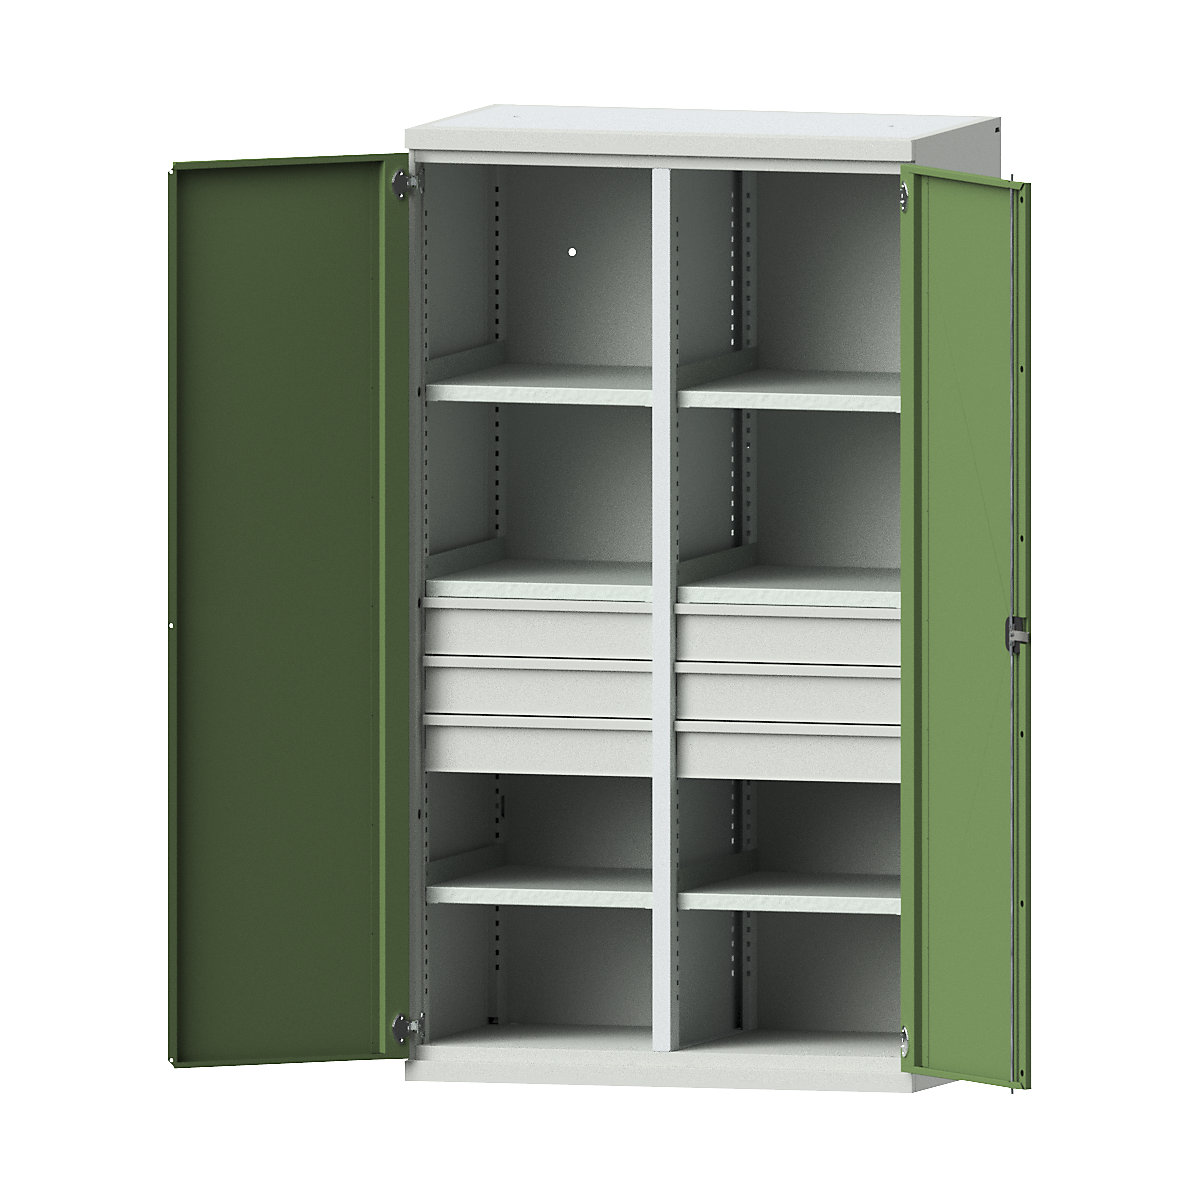 Heavy duty cupboard made of steel – eurokraft pro, 6 shelves, 6 x 120 mm high drawers, light grey / reseda green-9